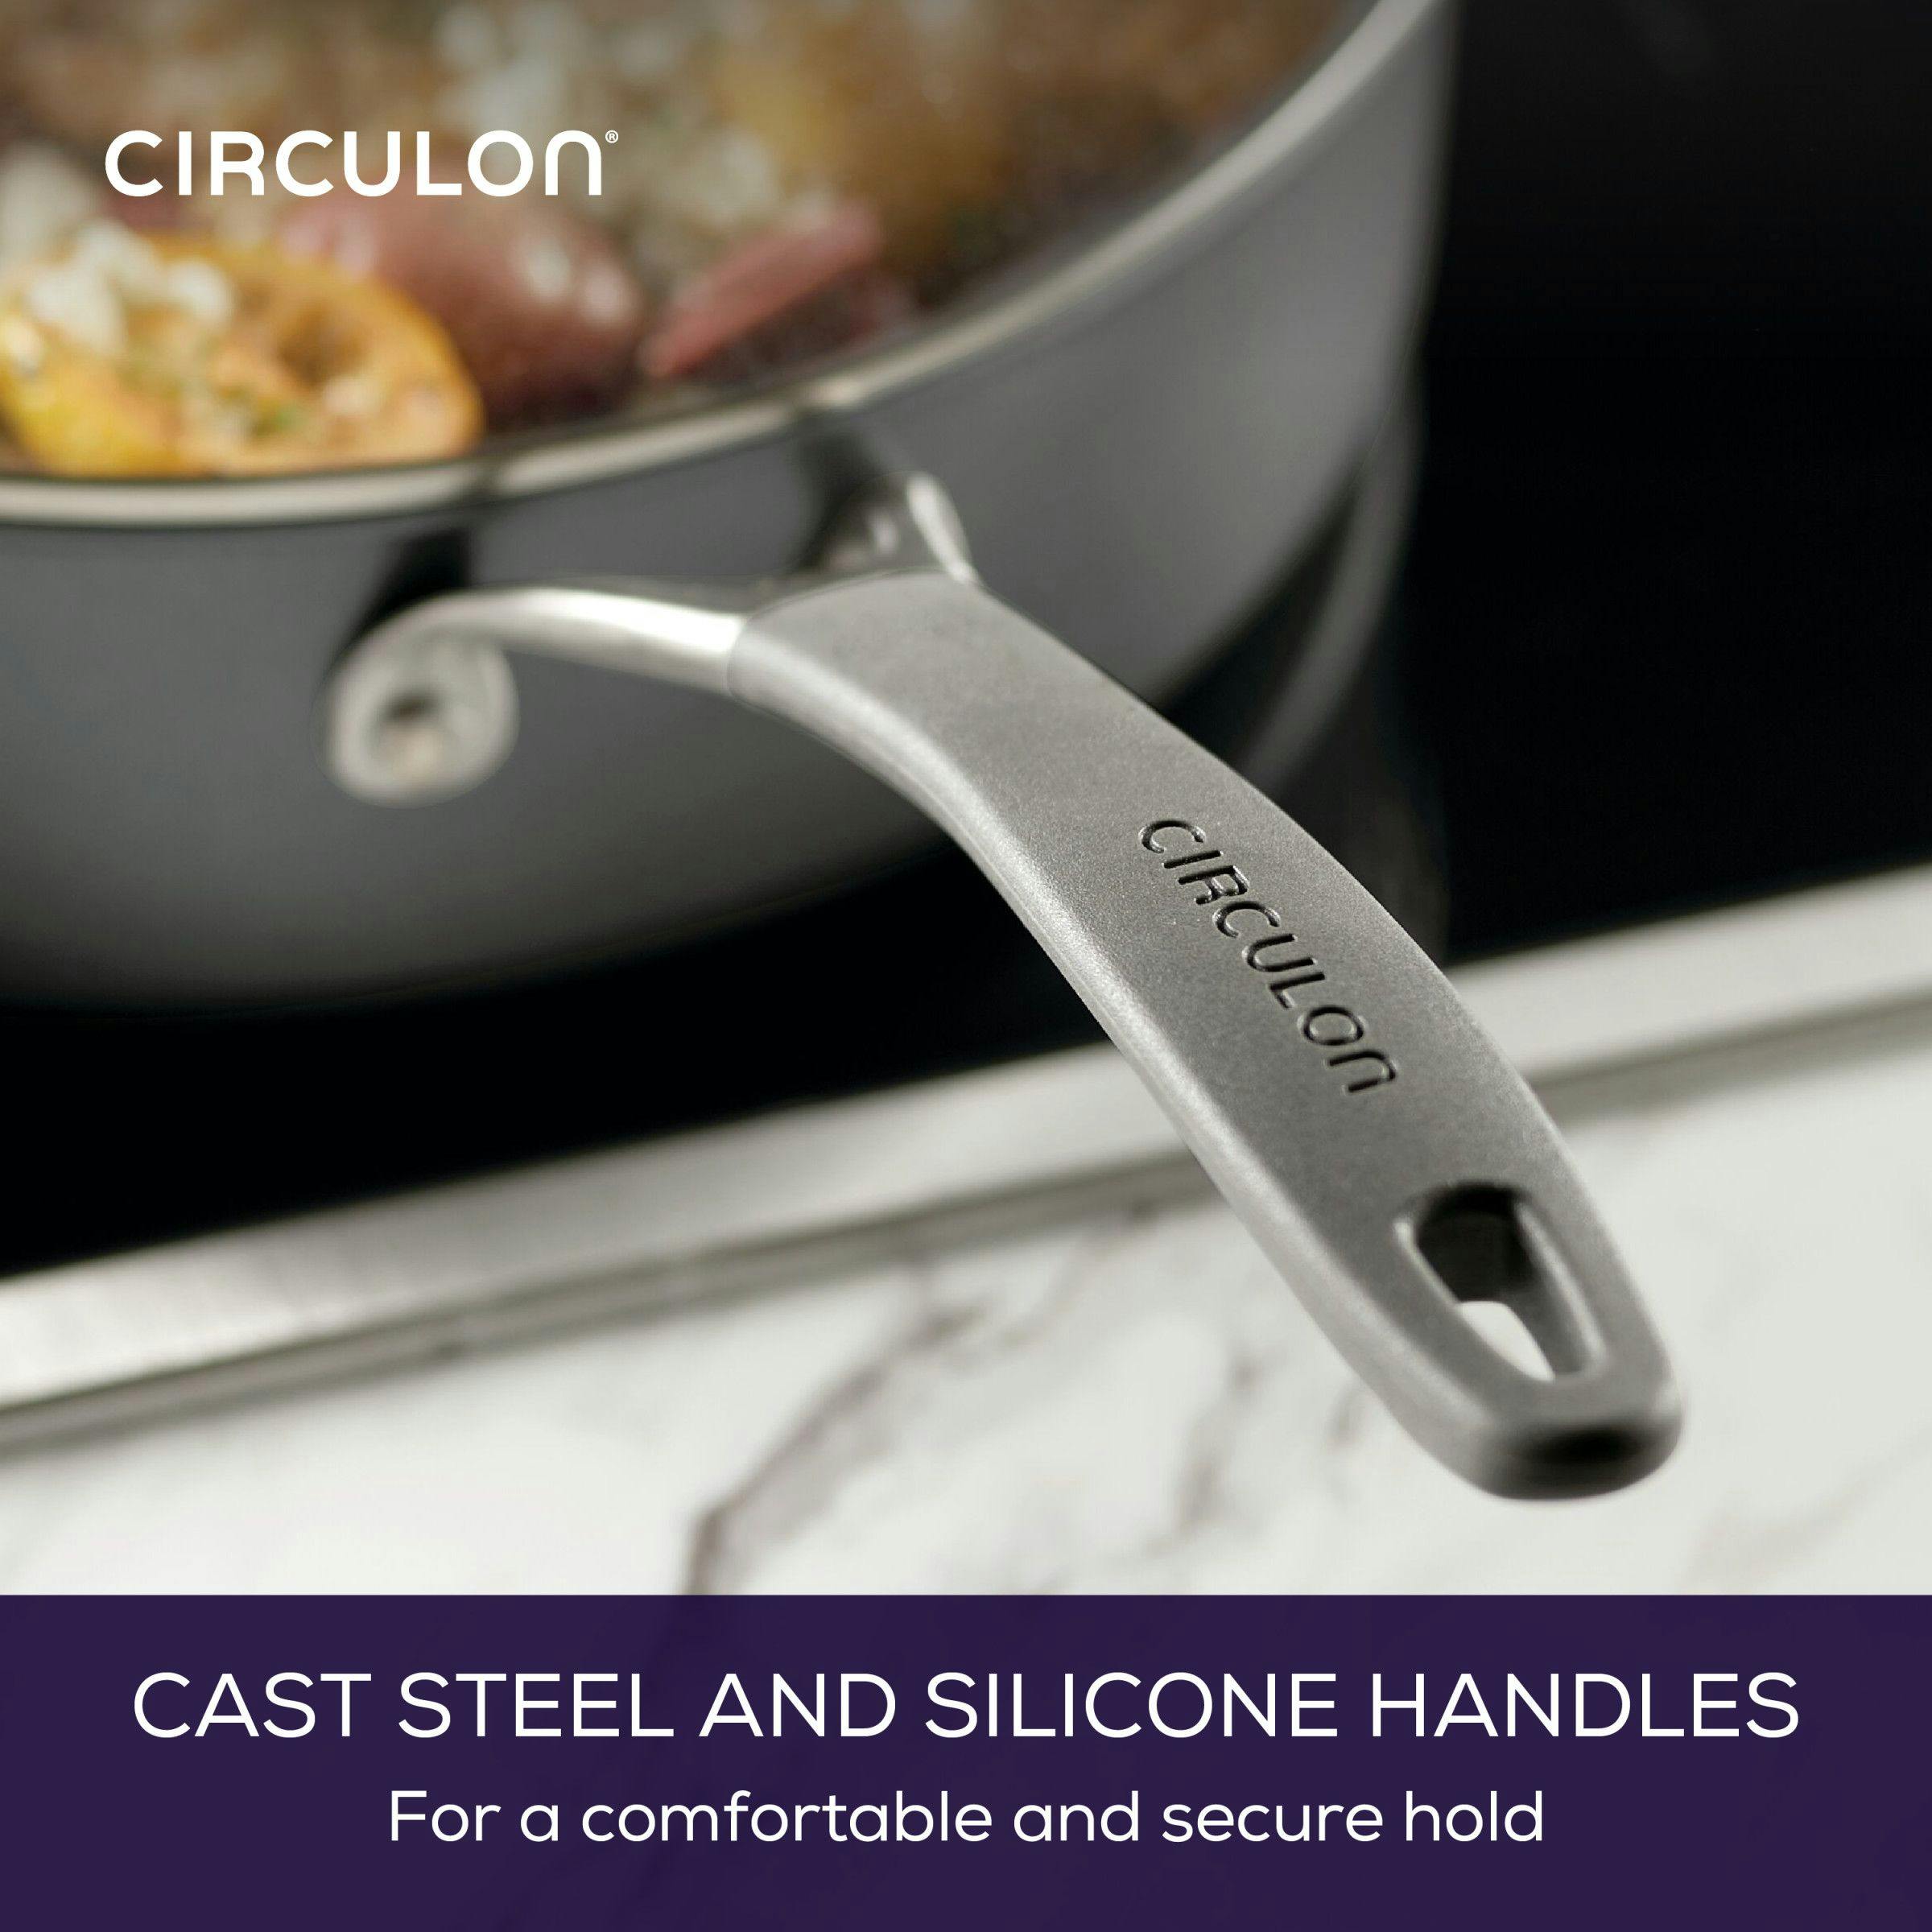 Circulon A1 Series with ScratchDefense 11 piece Non-Stick Cookware Set